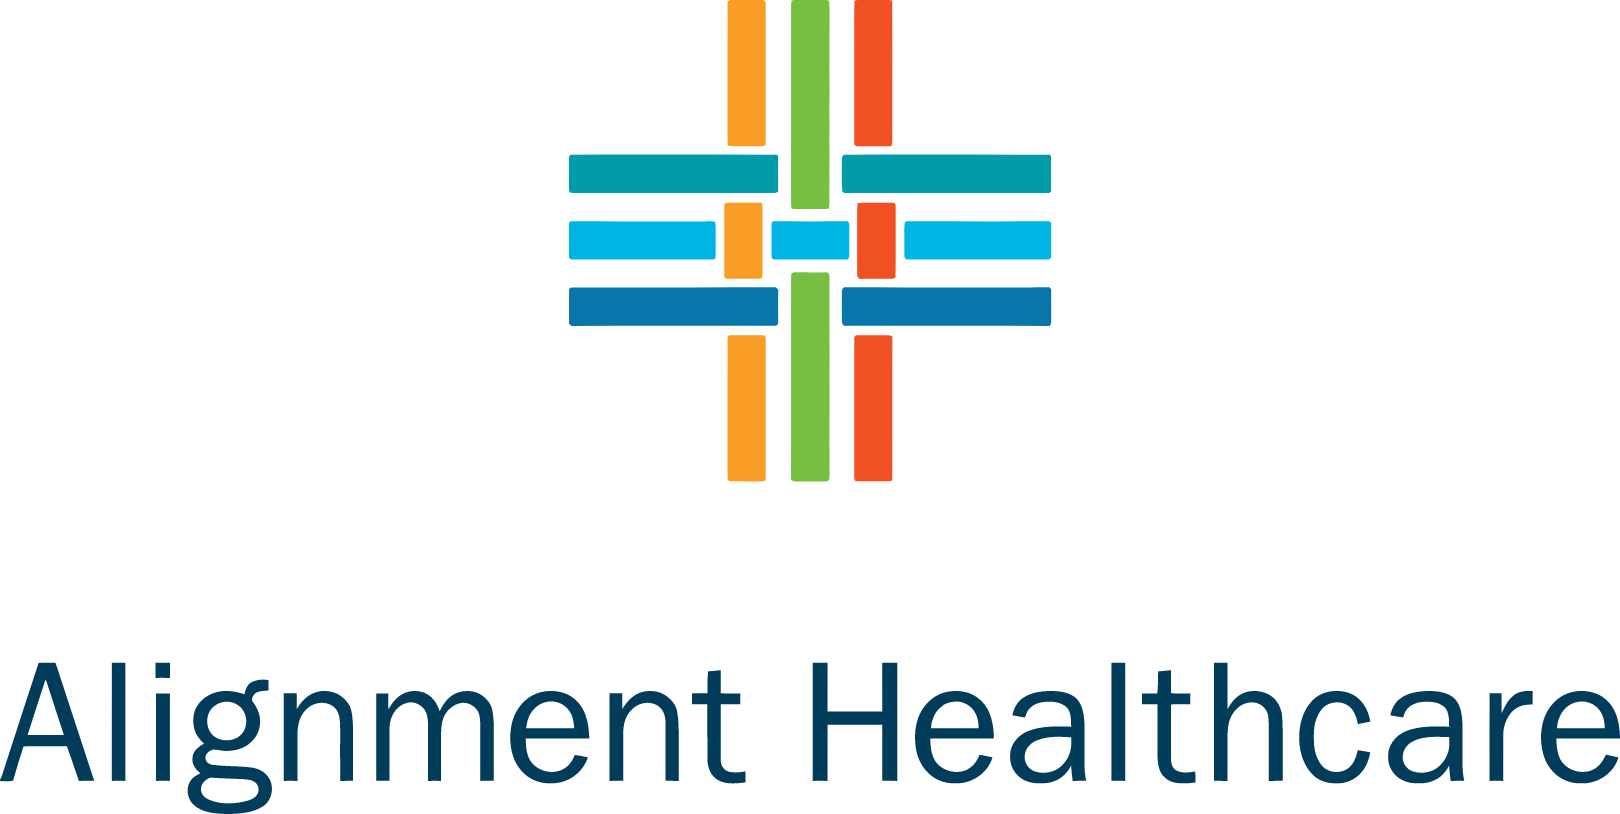 Alignment Healthcare logo large (transparent PNG)